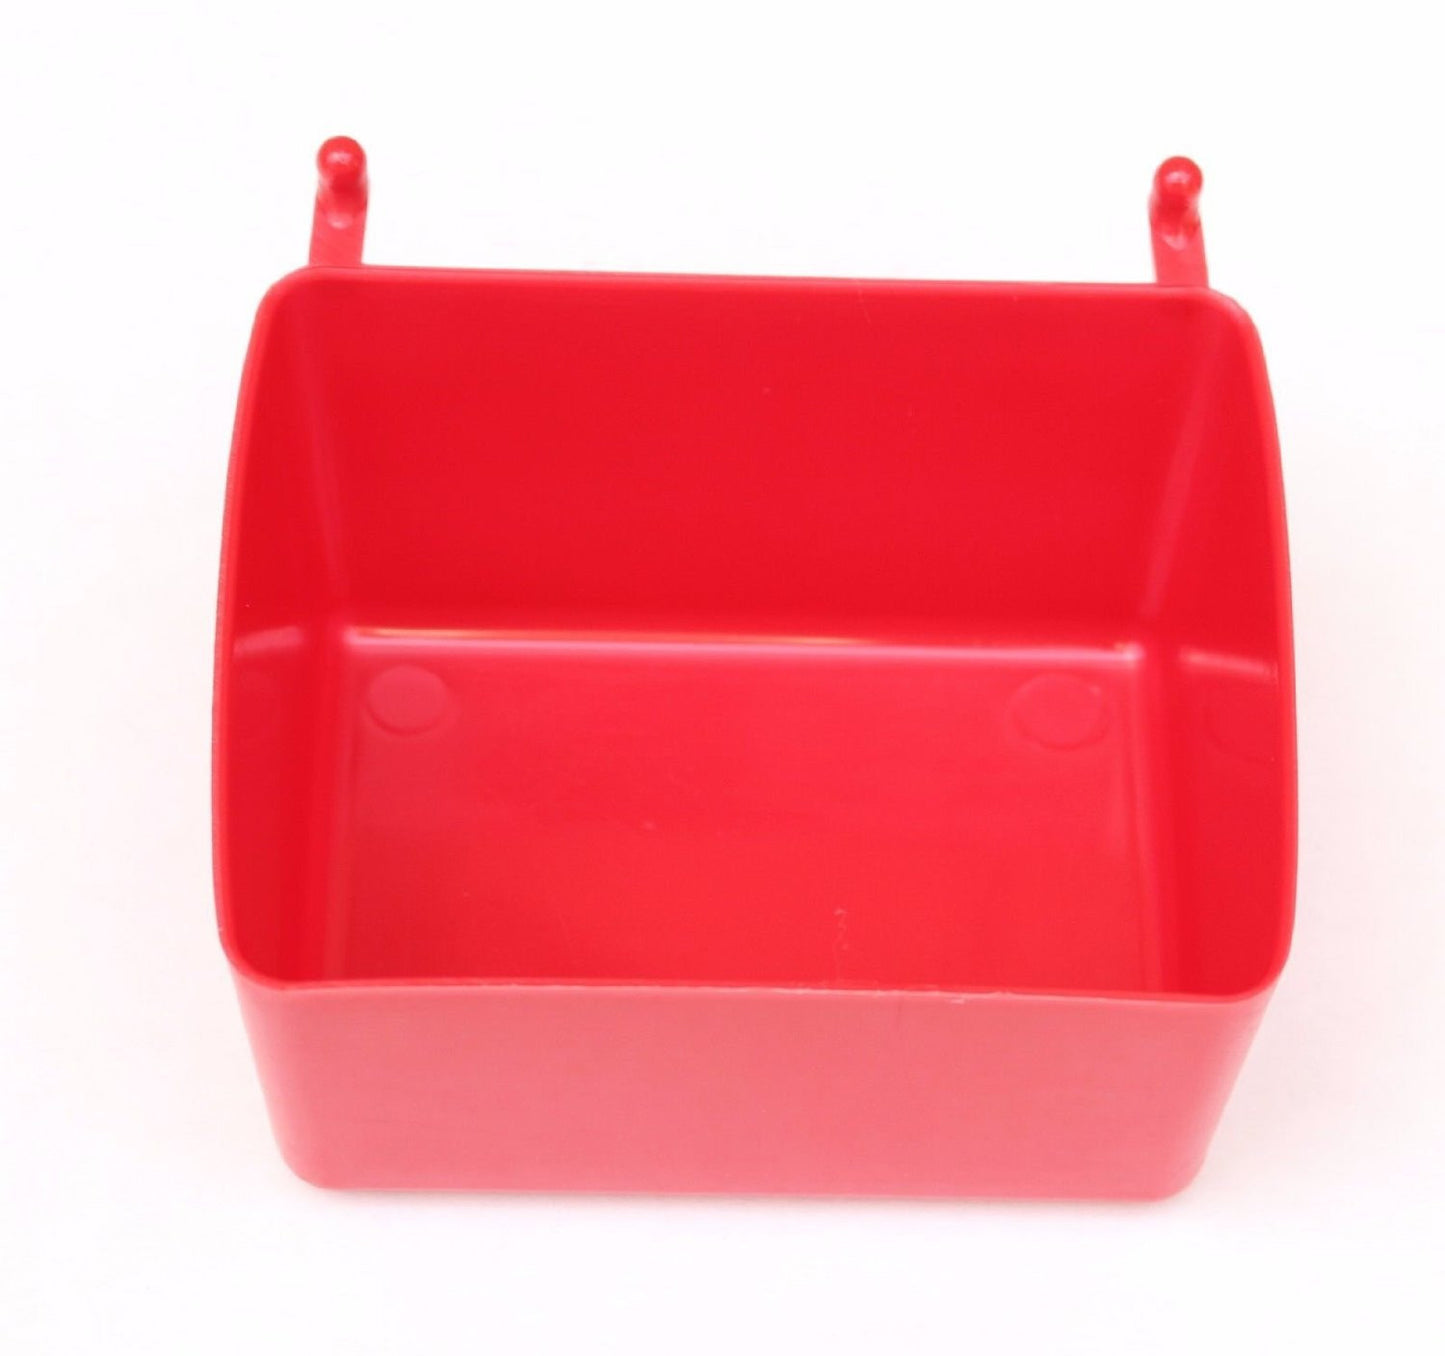 Small Plastic Red Pegboard Storage/Part Bins- Heavy Duty- Multi Pack